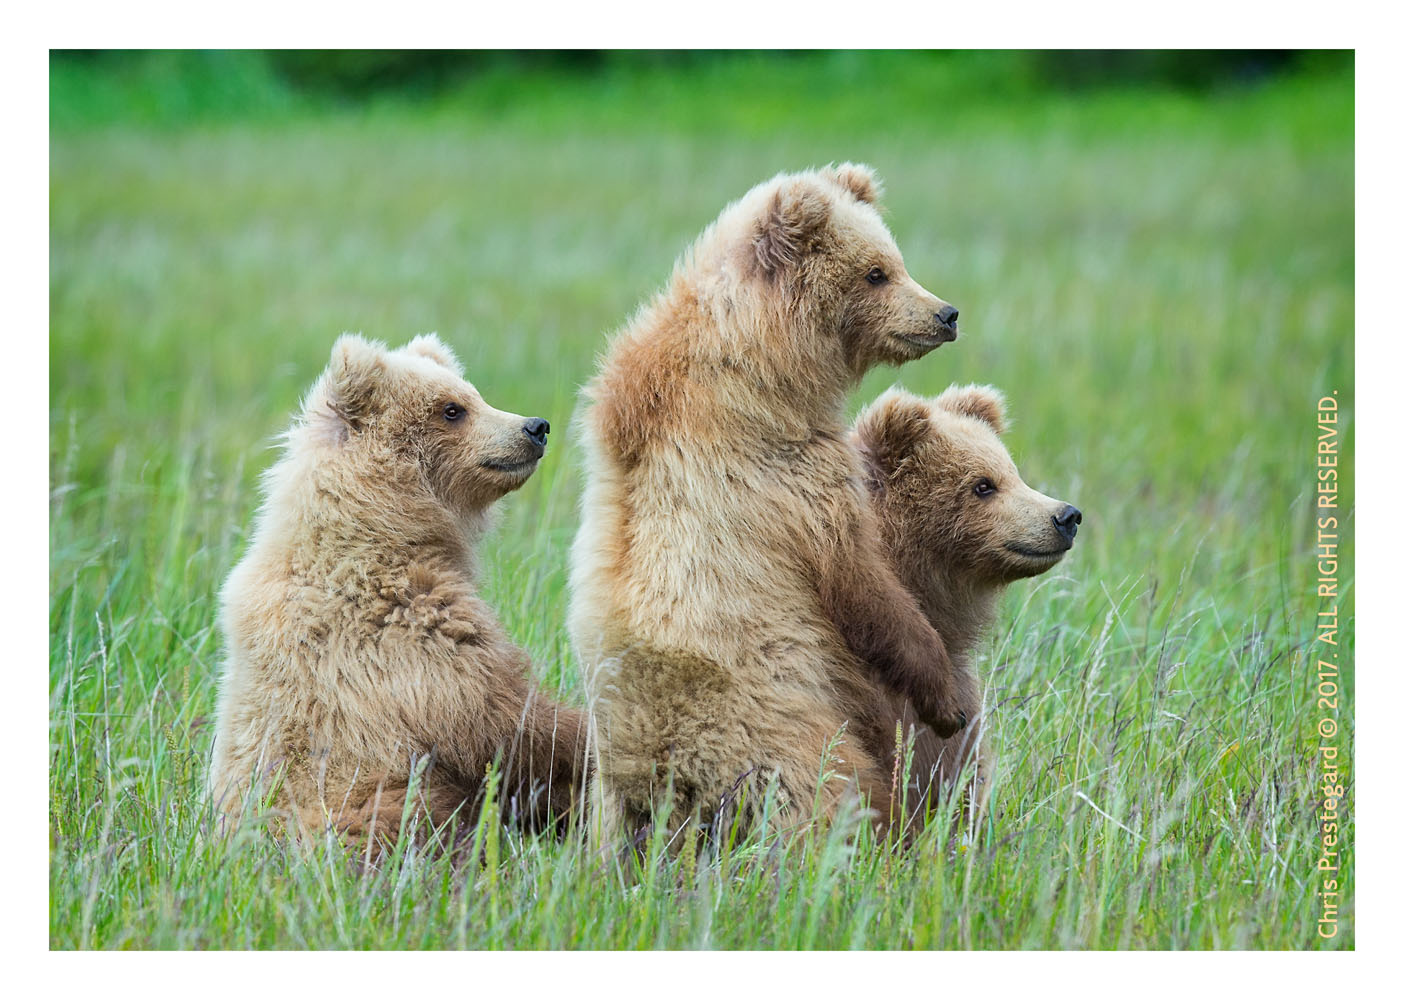 Coastal brown bears, Alaska June 2017